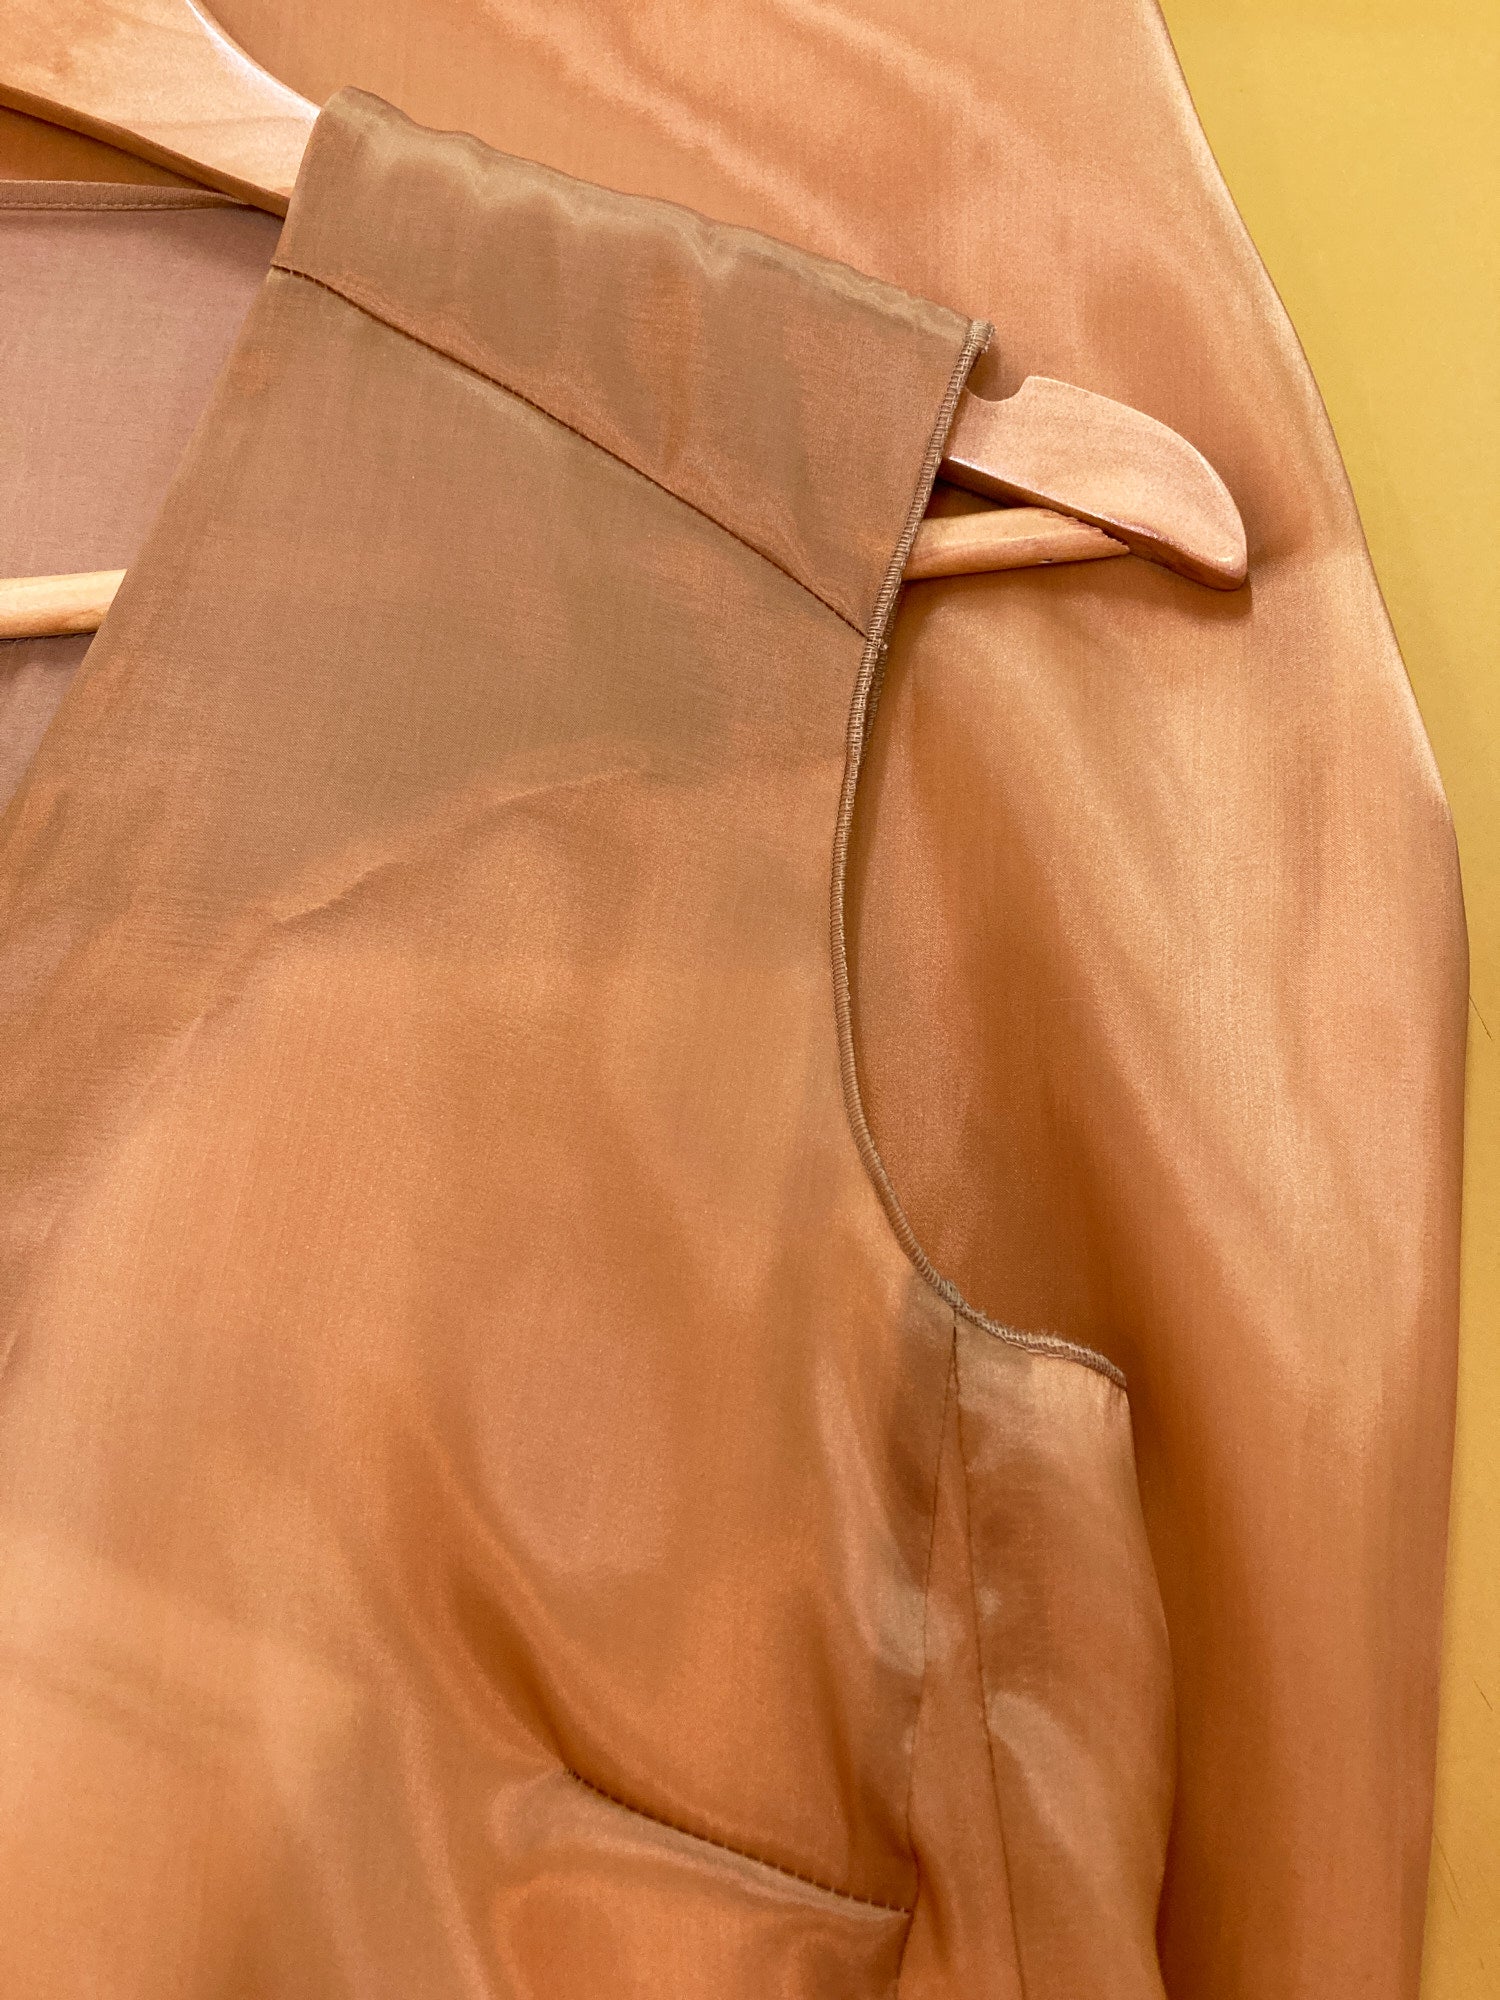 Costume National sheeny brown nylon-silk blend v-neck sleeveless dress - 38 S XS 6